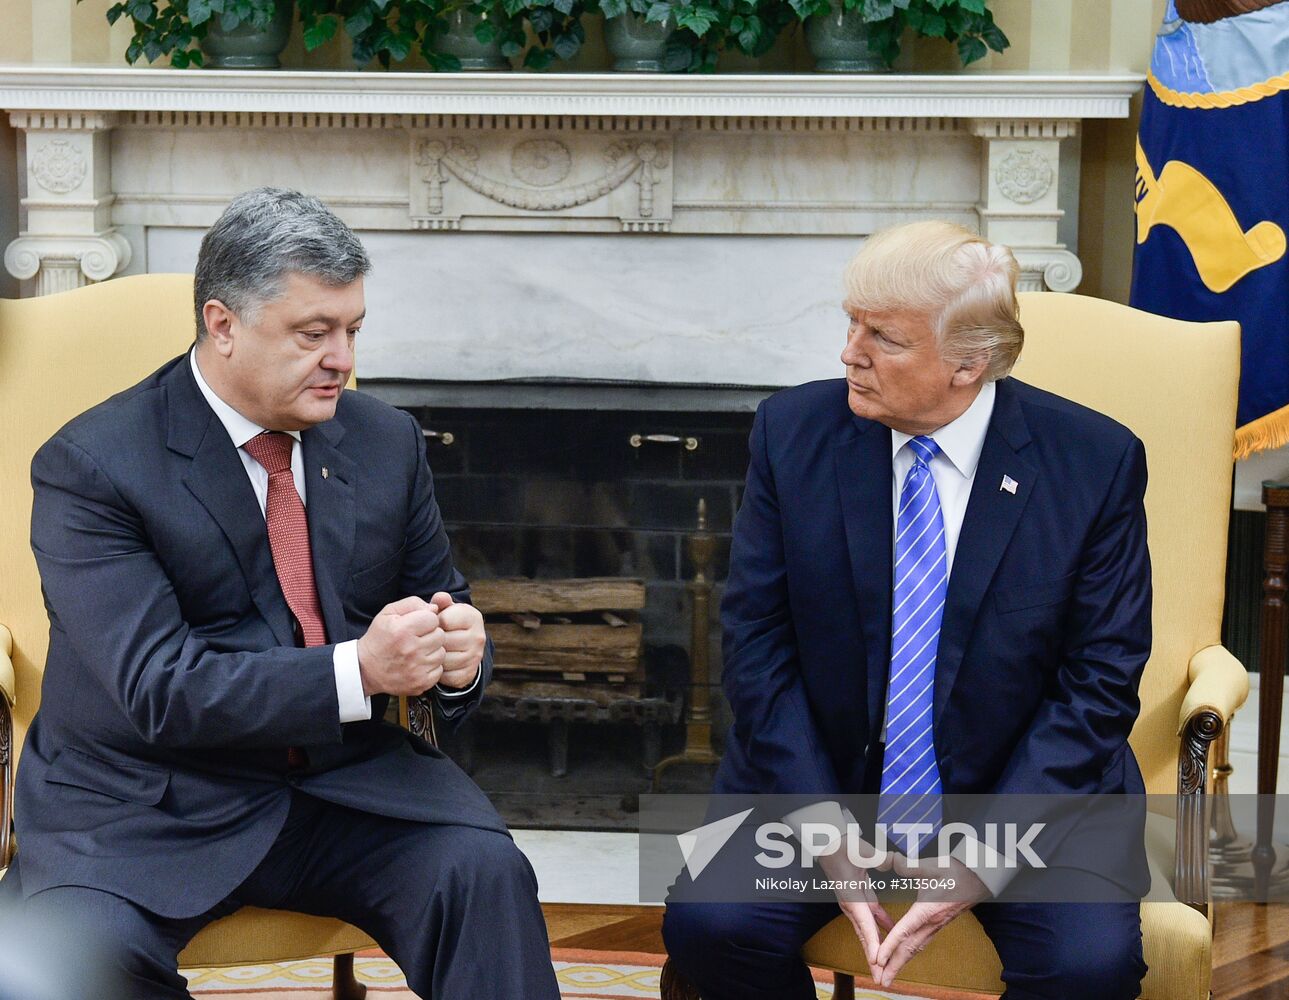 Ukrainian President Poroshenko's visit to the USA